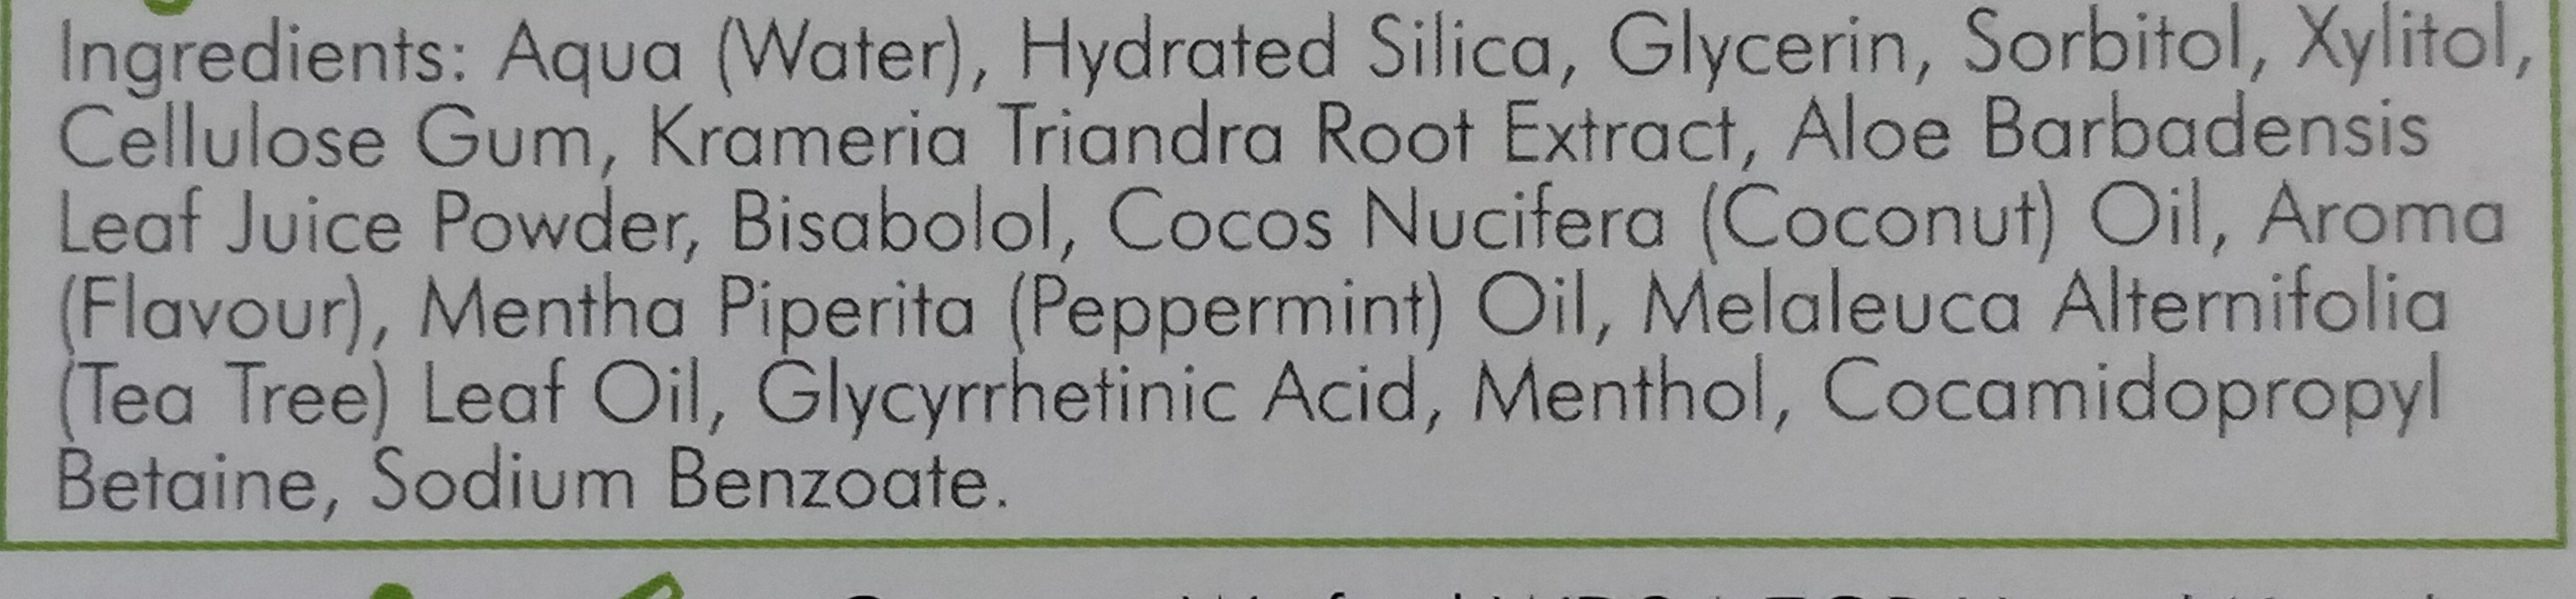 Dentifrice coconut oil and aloe vera - Ingredients - fr